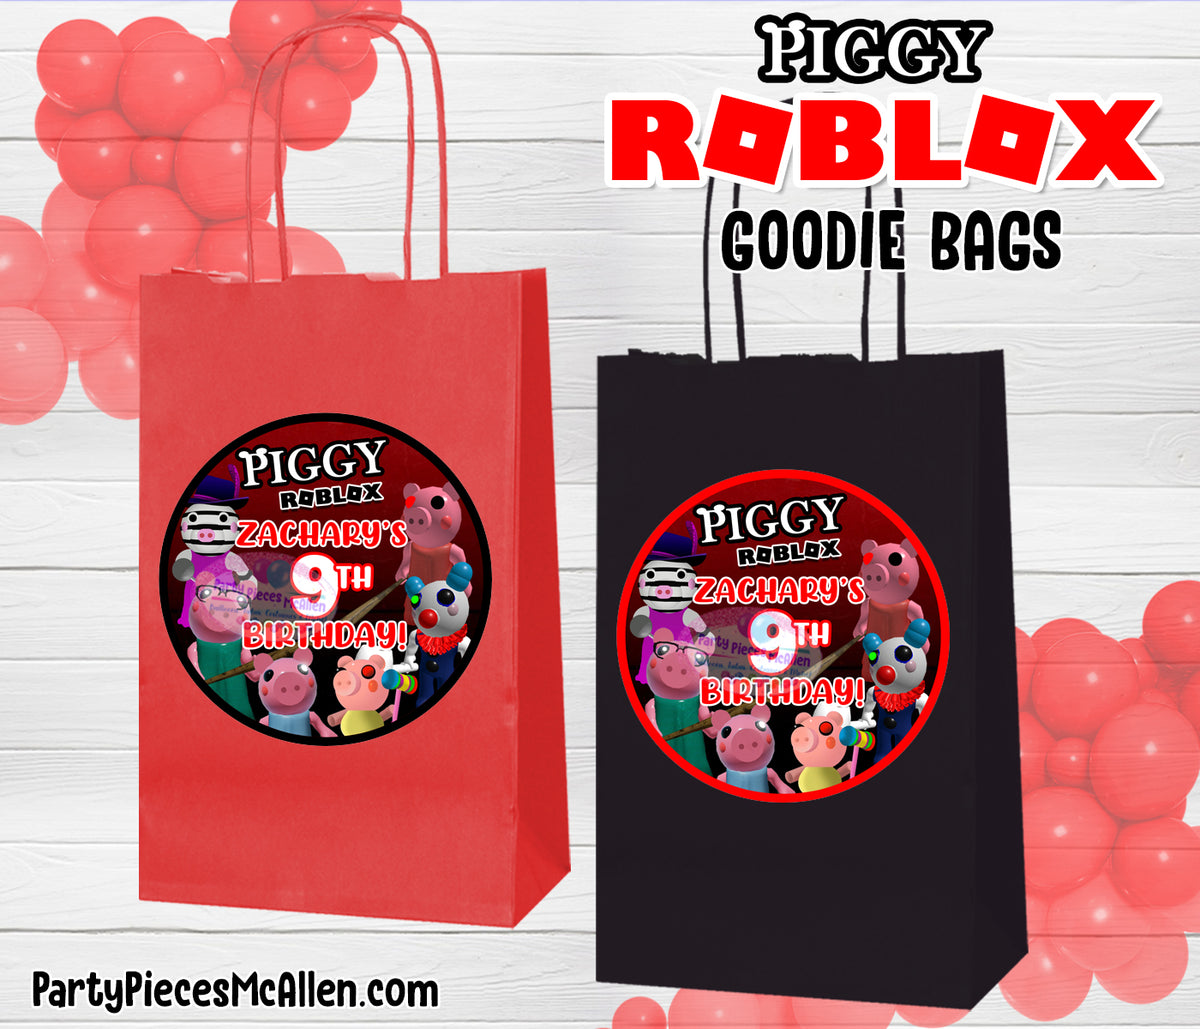 Piggy Roblox Goodie Bags – Party Pieces McAllen